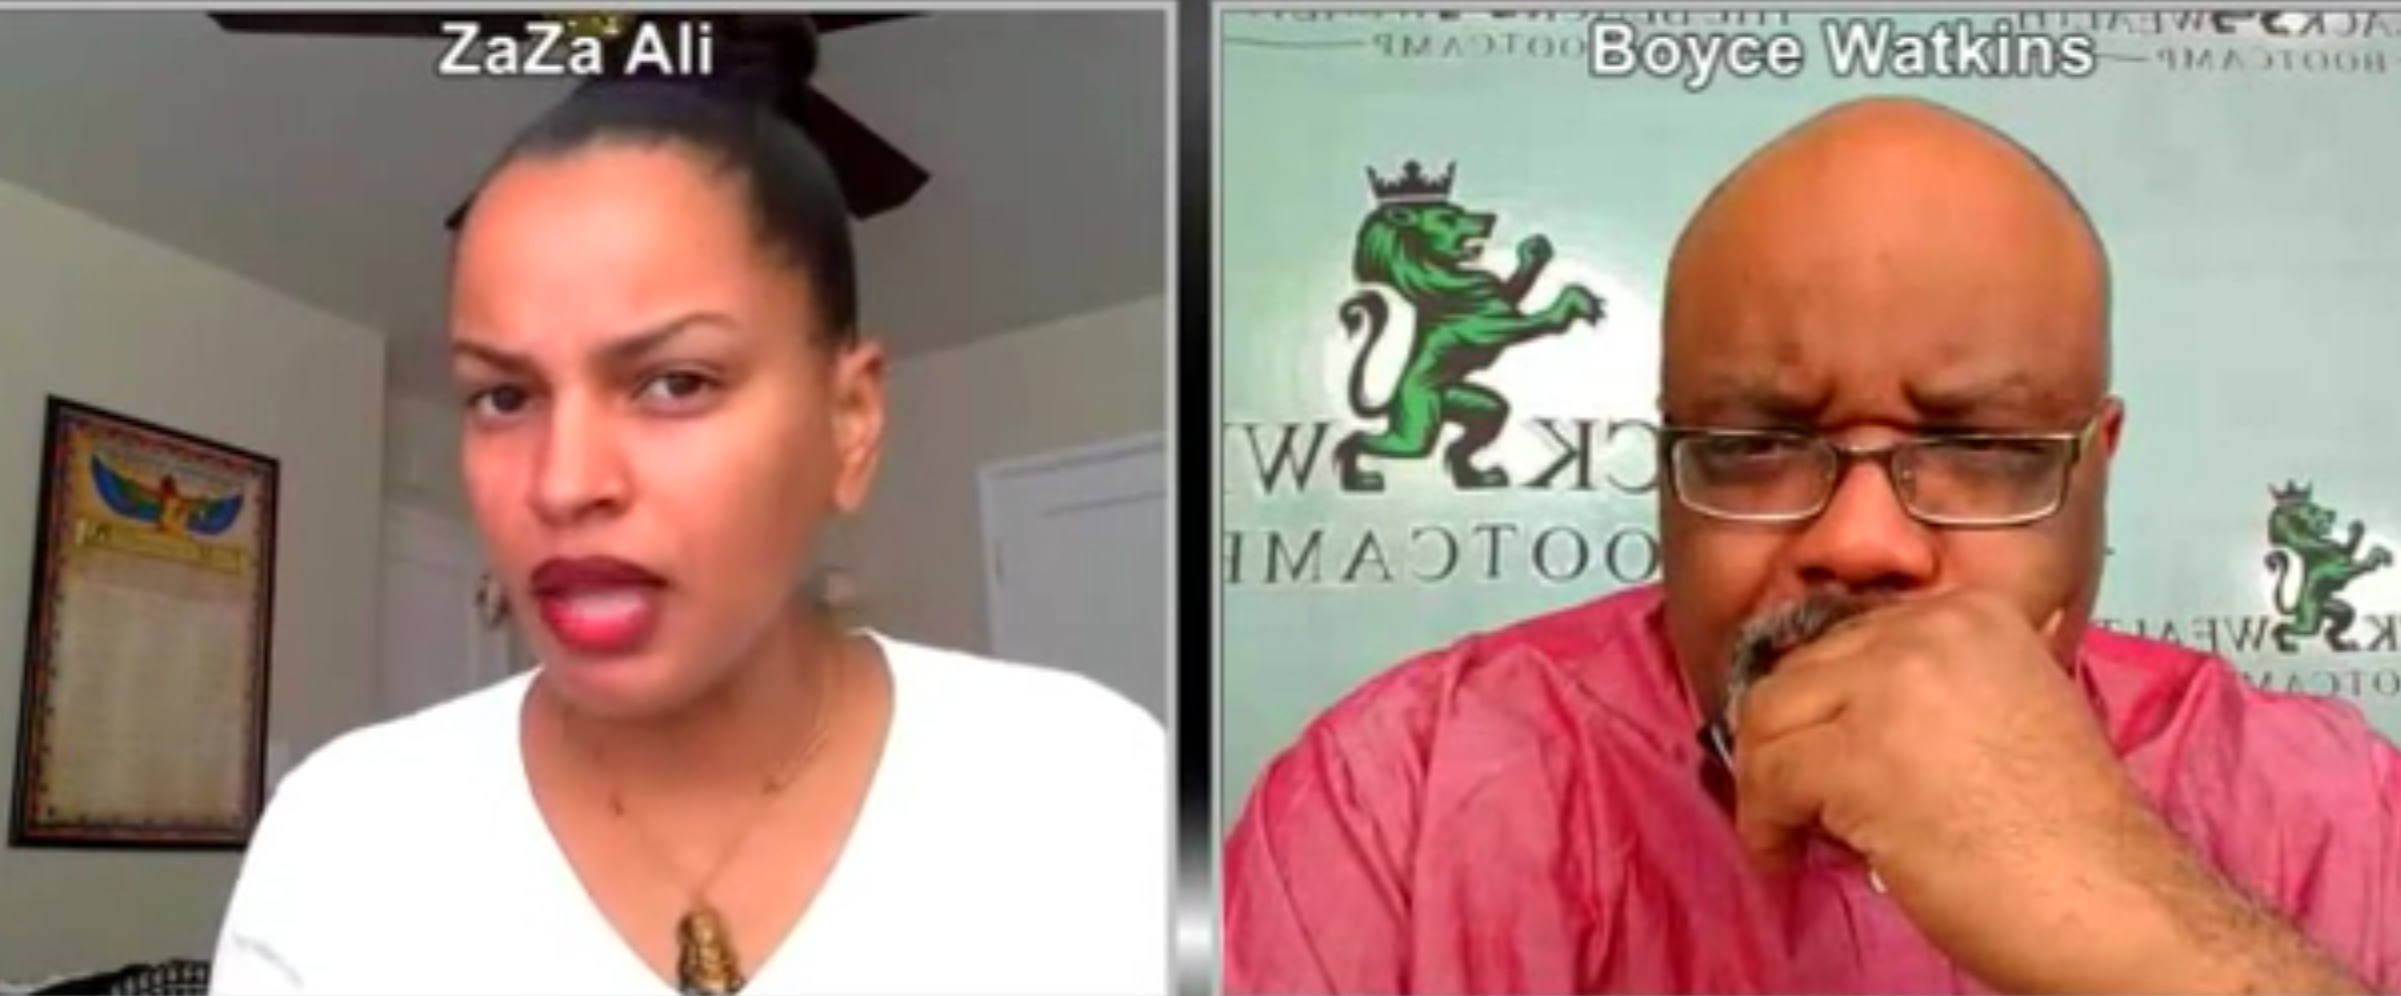 Dr. Boyce Watkins Sued for Fraud & ZaZa Ali On the Hot Seat